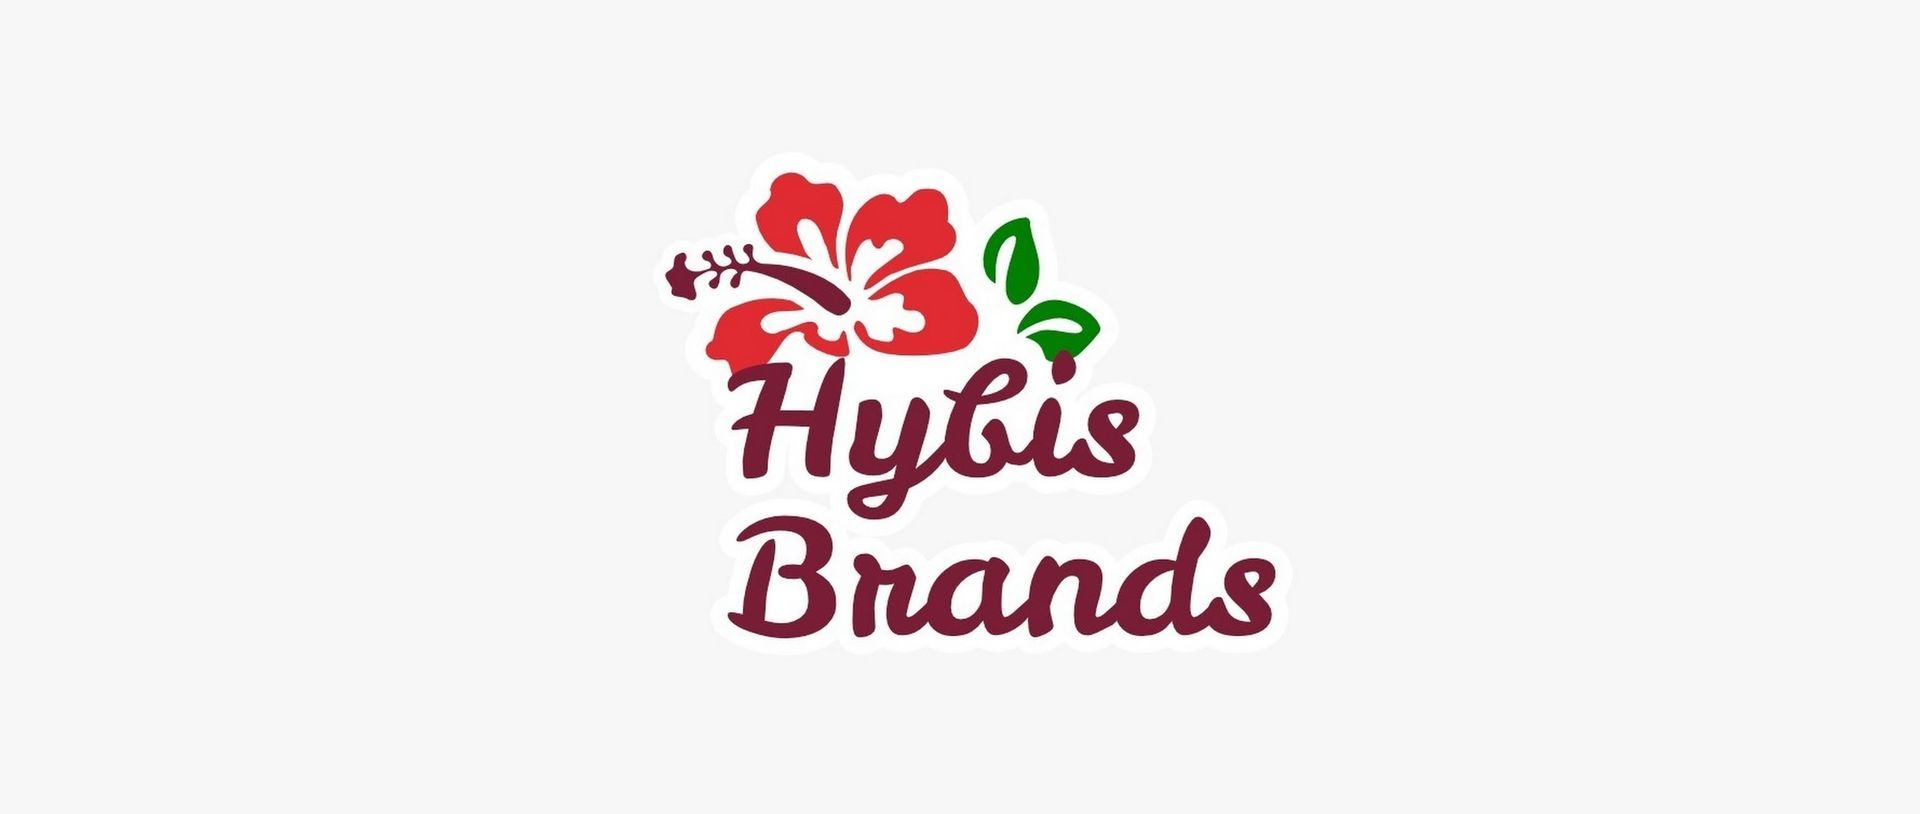 Hybis Brands - AfroBiz Marketplace